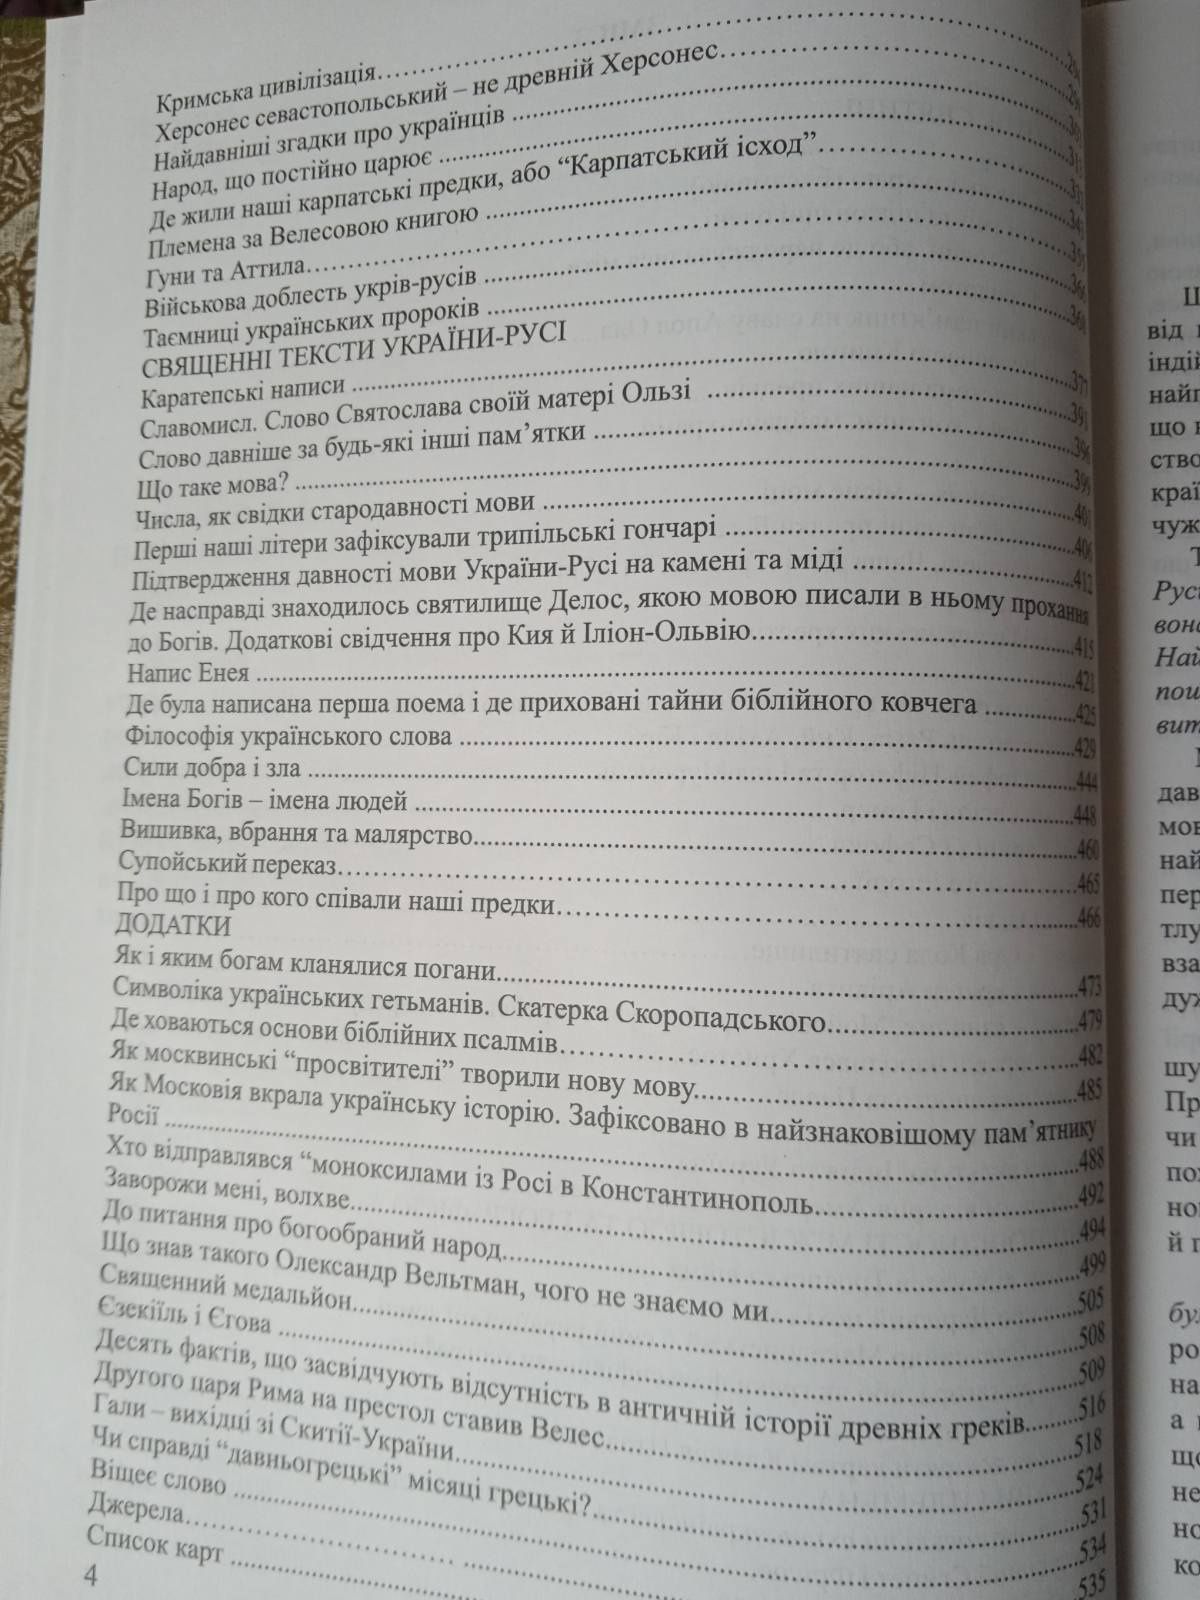 Книга нова Великий Код України -Руси